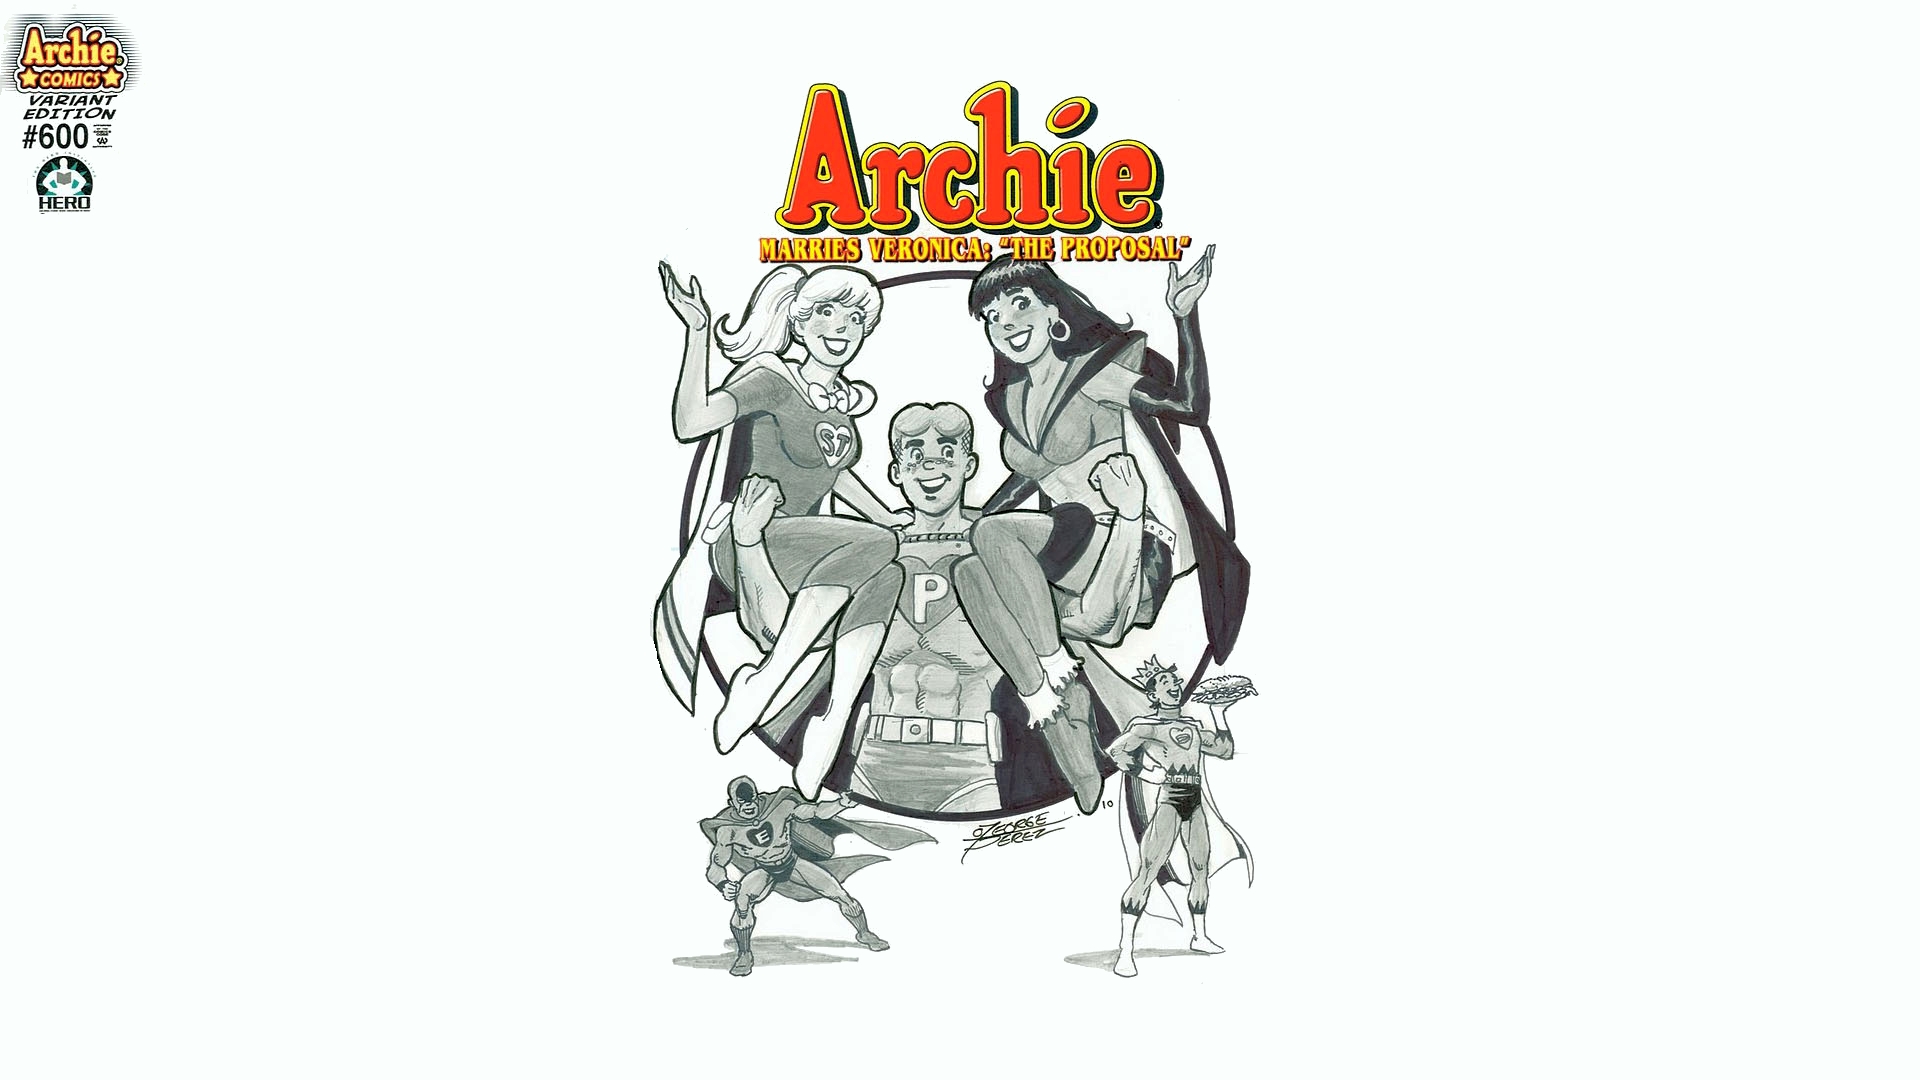 comics, archie, archie andrews, archie comics, betty cooper, jughead jones, veronica lodge